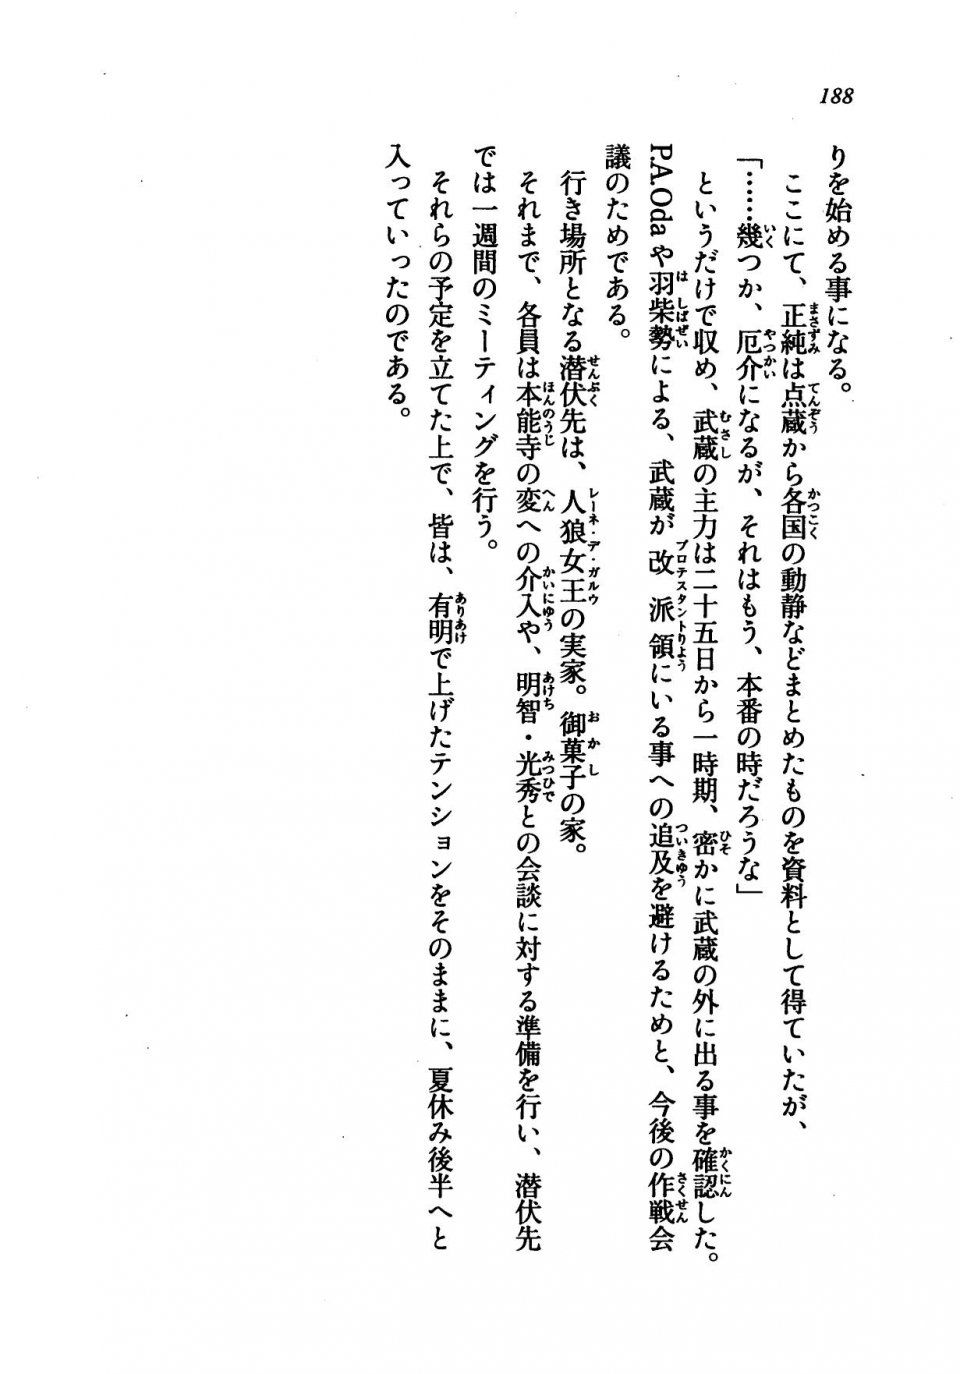 Kyoukai Senjou no Horizon LN Vol 21(8C) Part 1 - Photo #187